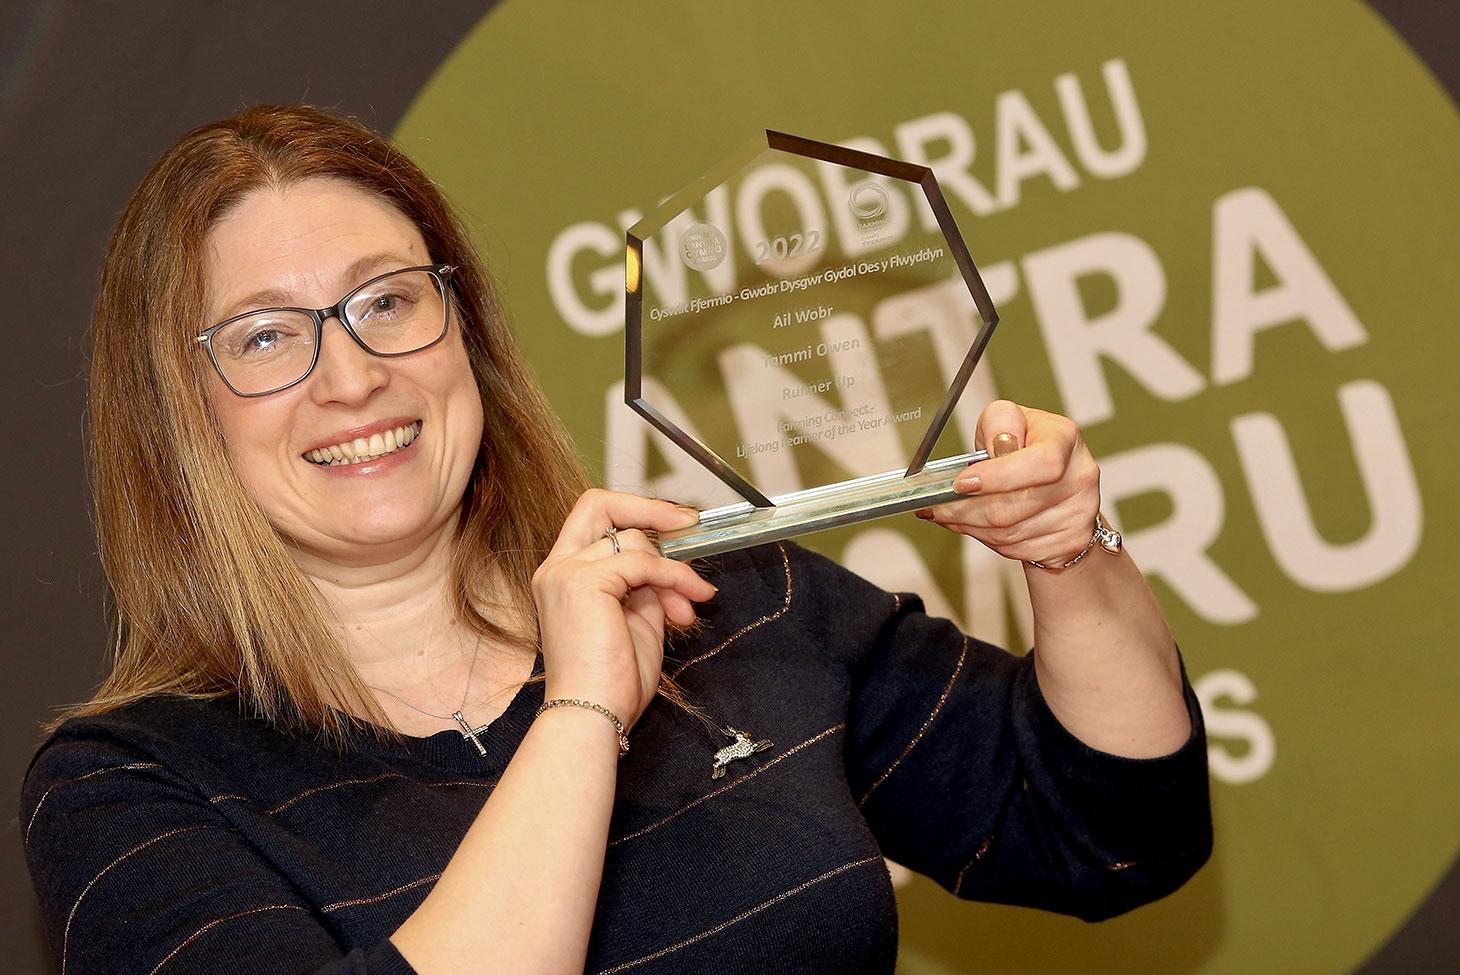 Winner Tammi Owen holding her award in front of the Lantra Cymru Awards 2022 sign